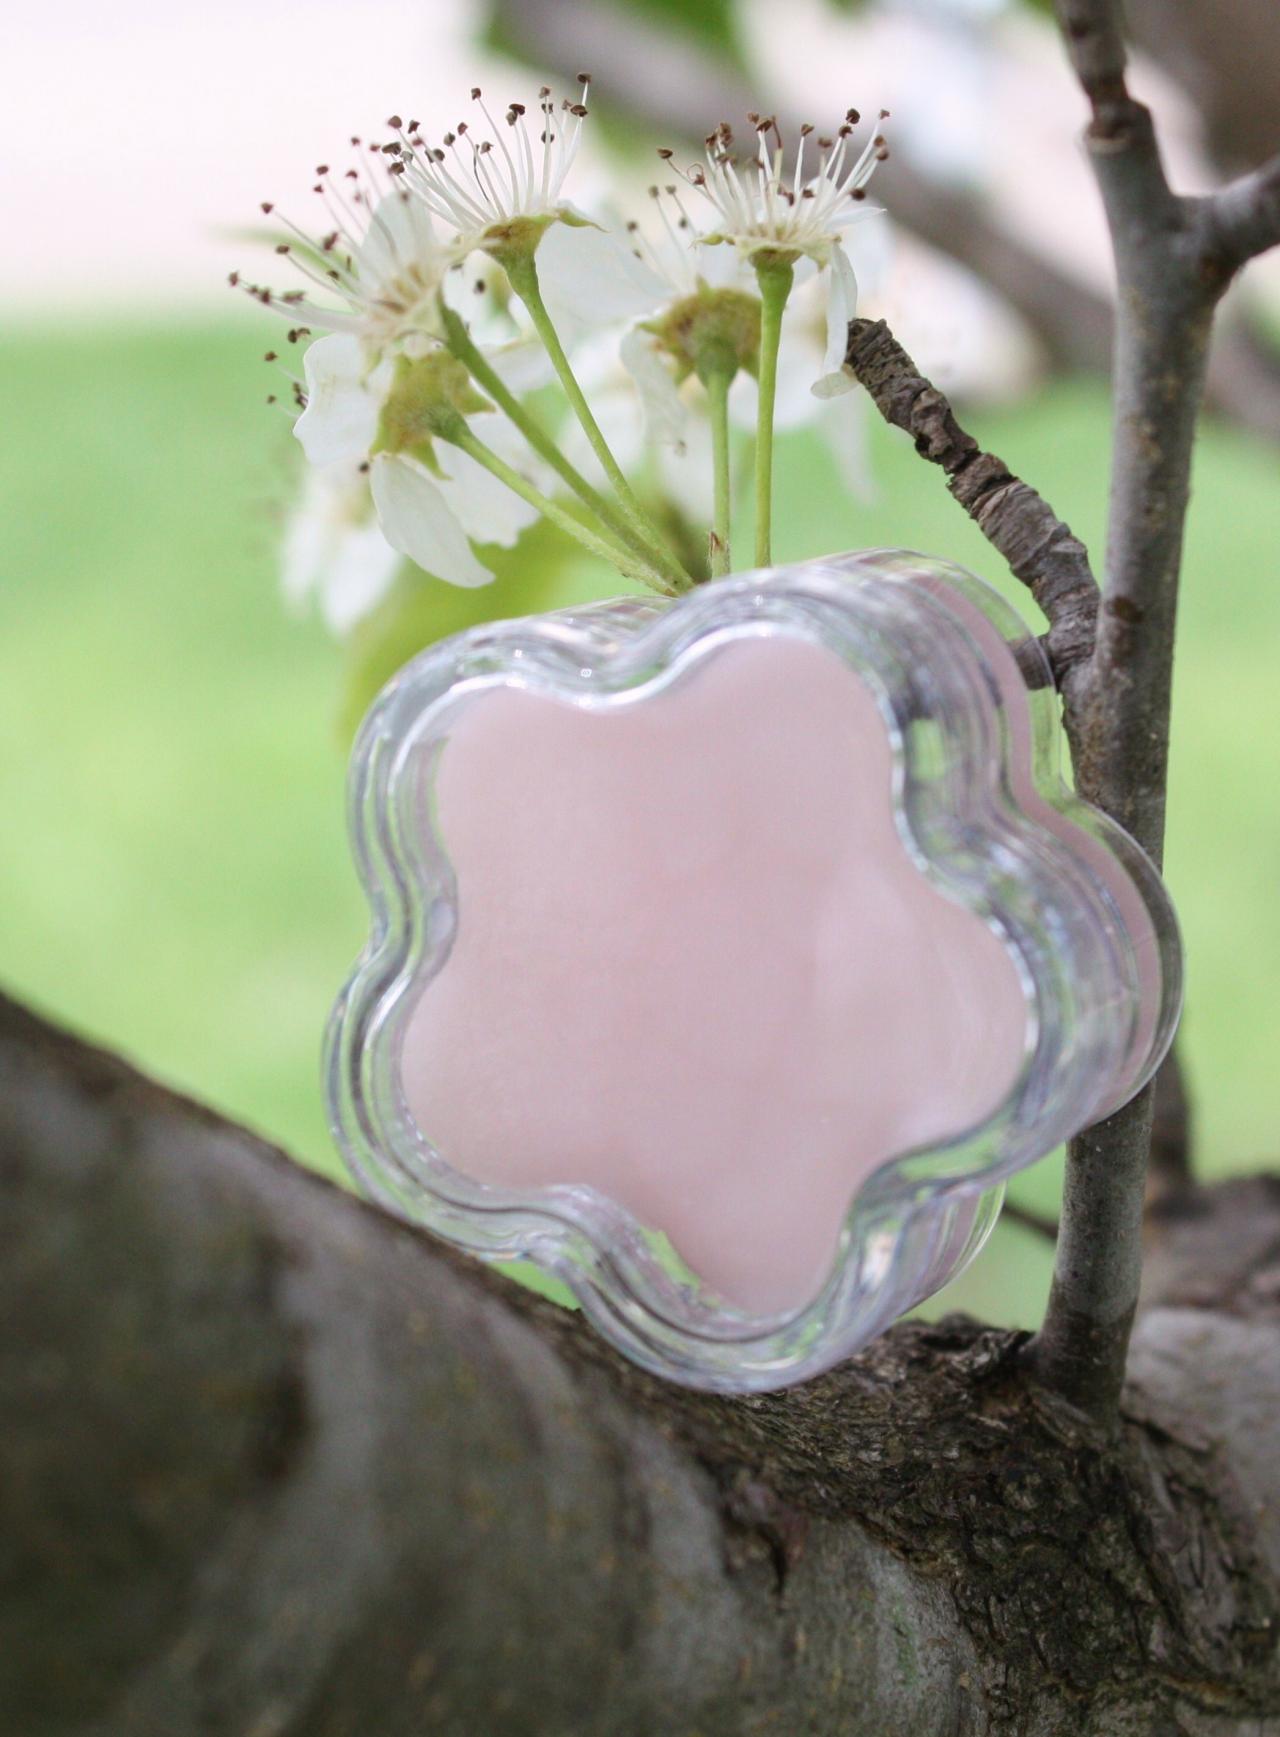 Cherry Blossom Solid Perfume